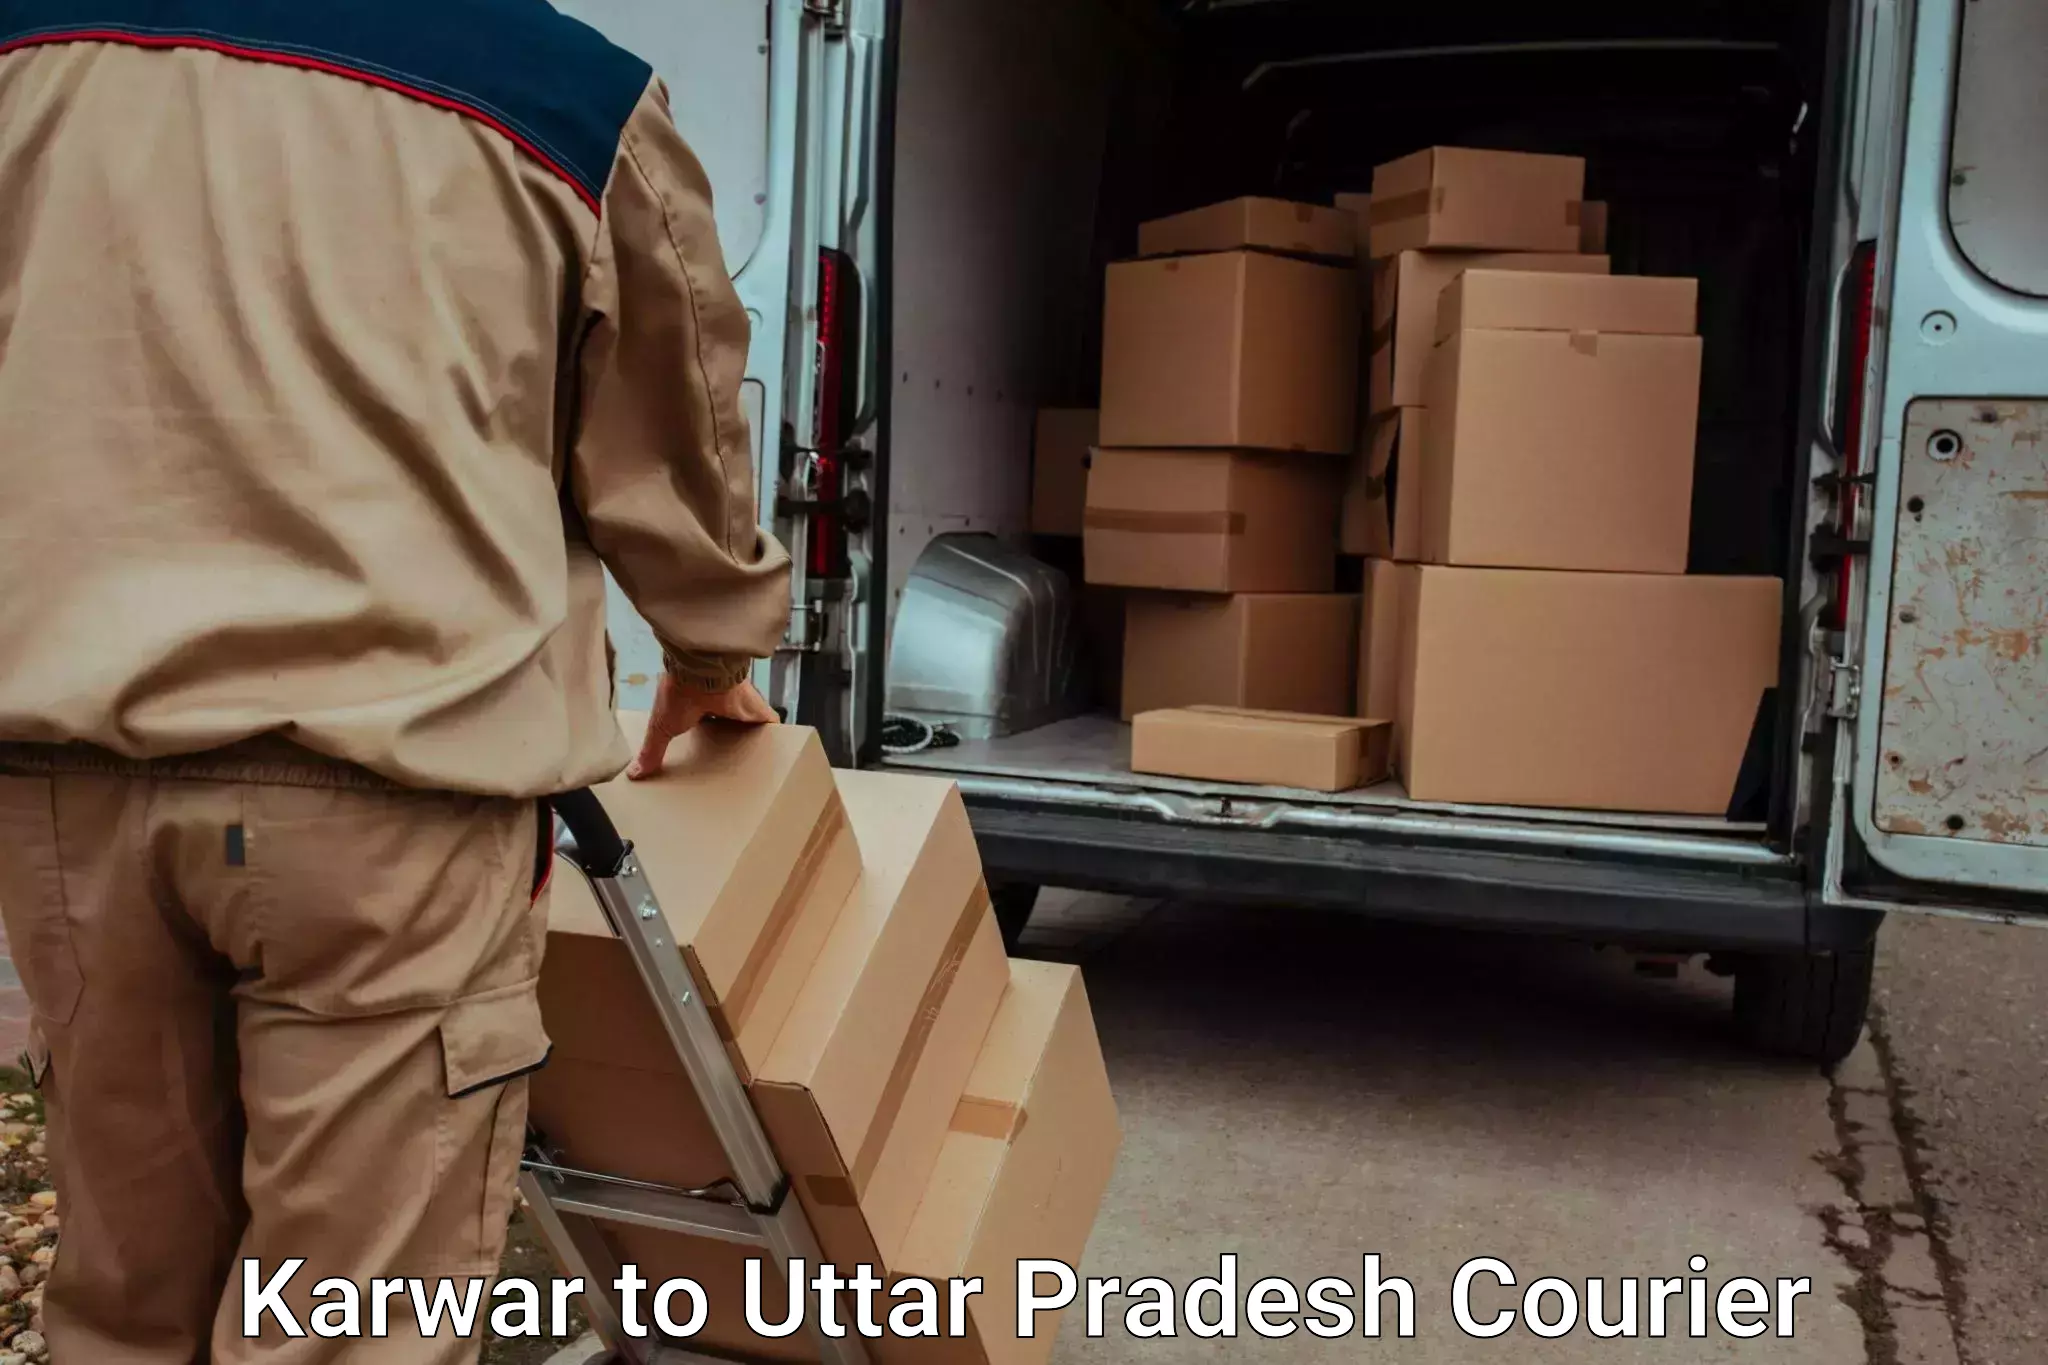 Professional moving assistance Karwar to Uttar Pradesh